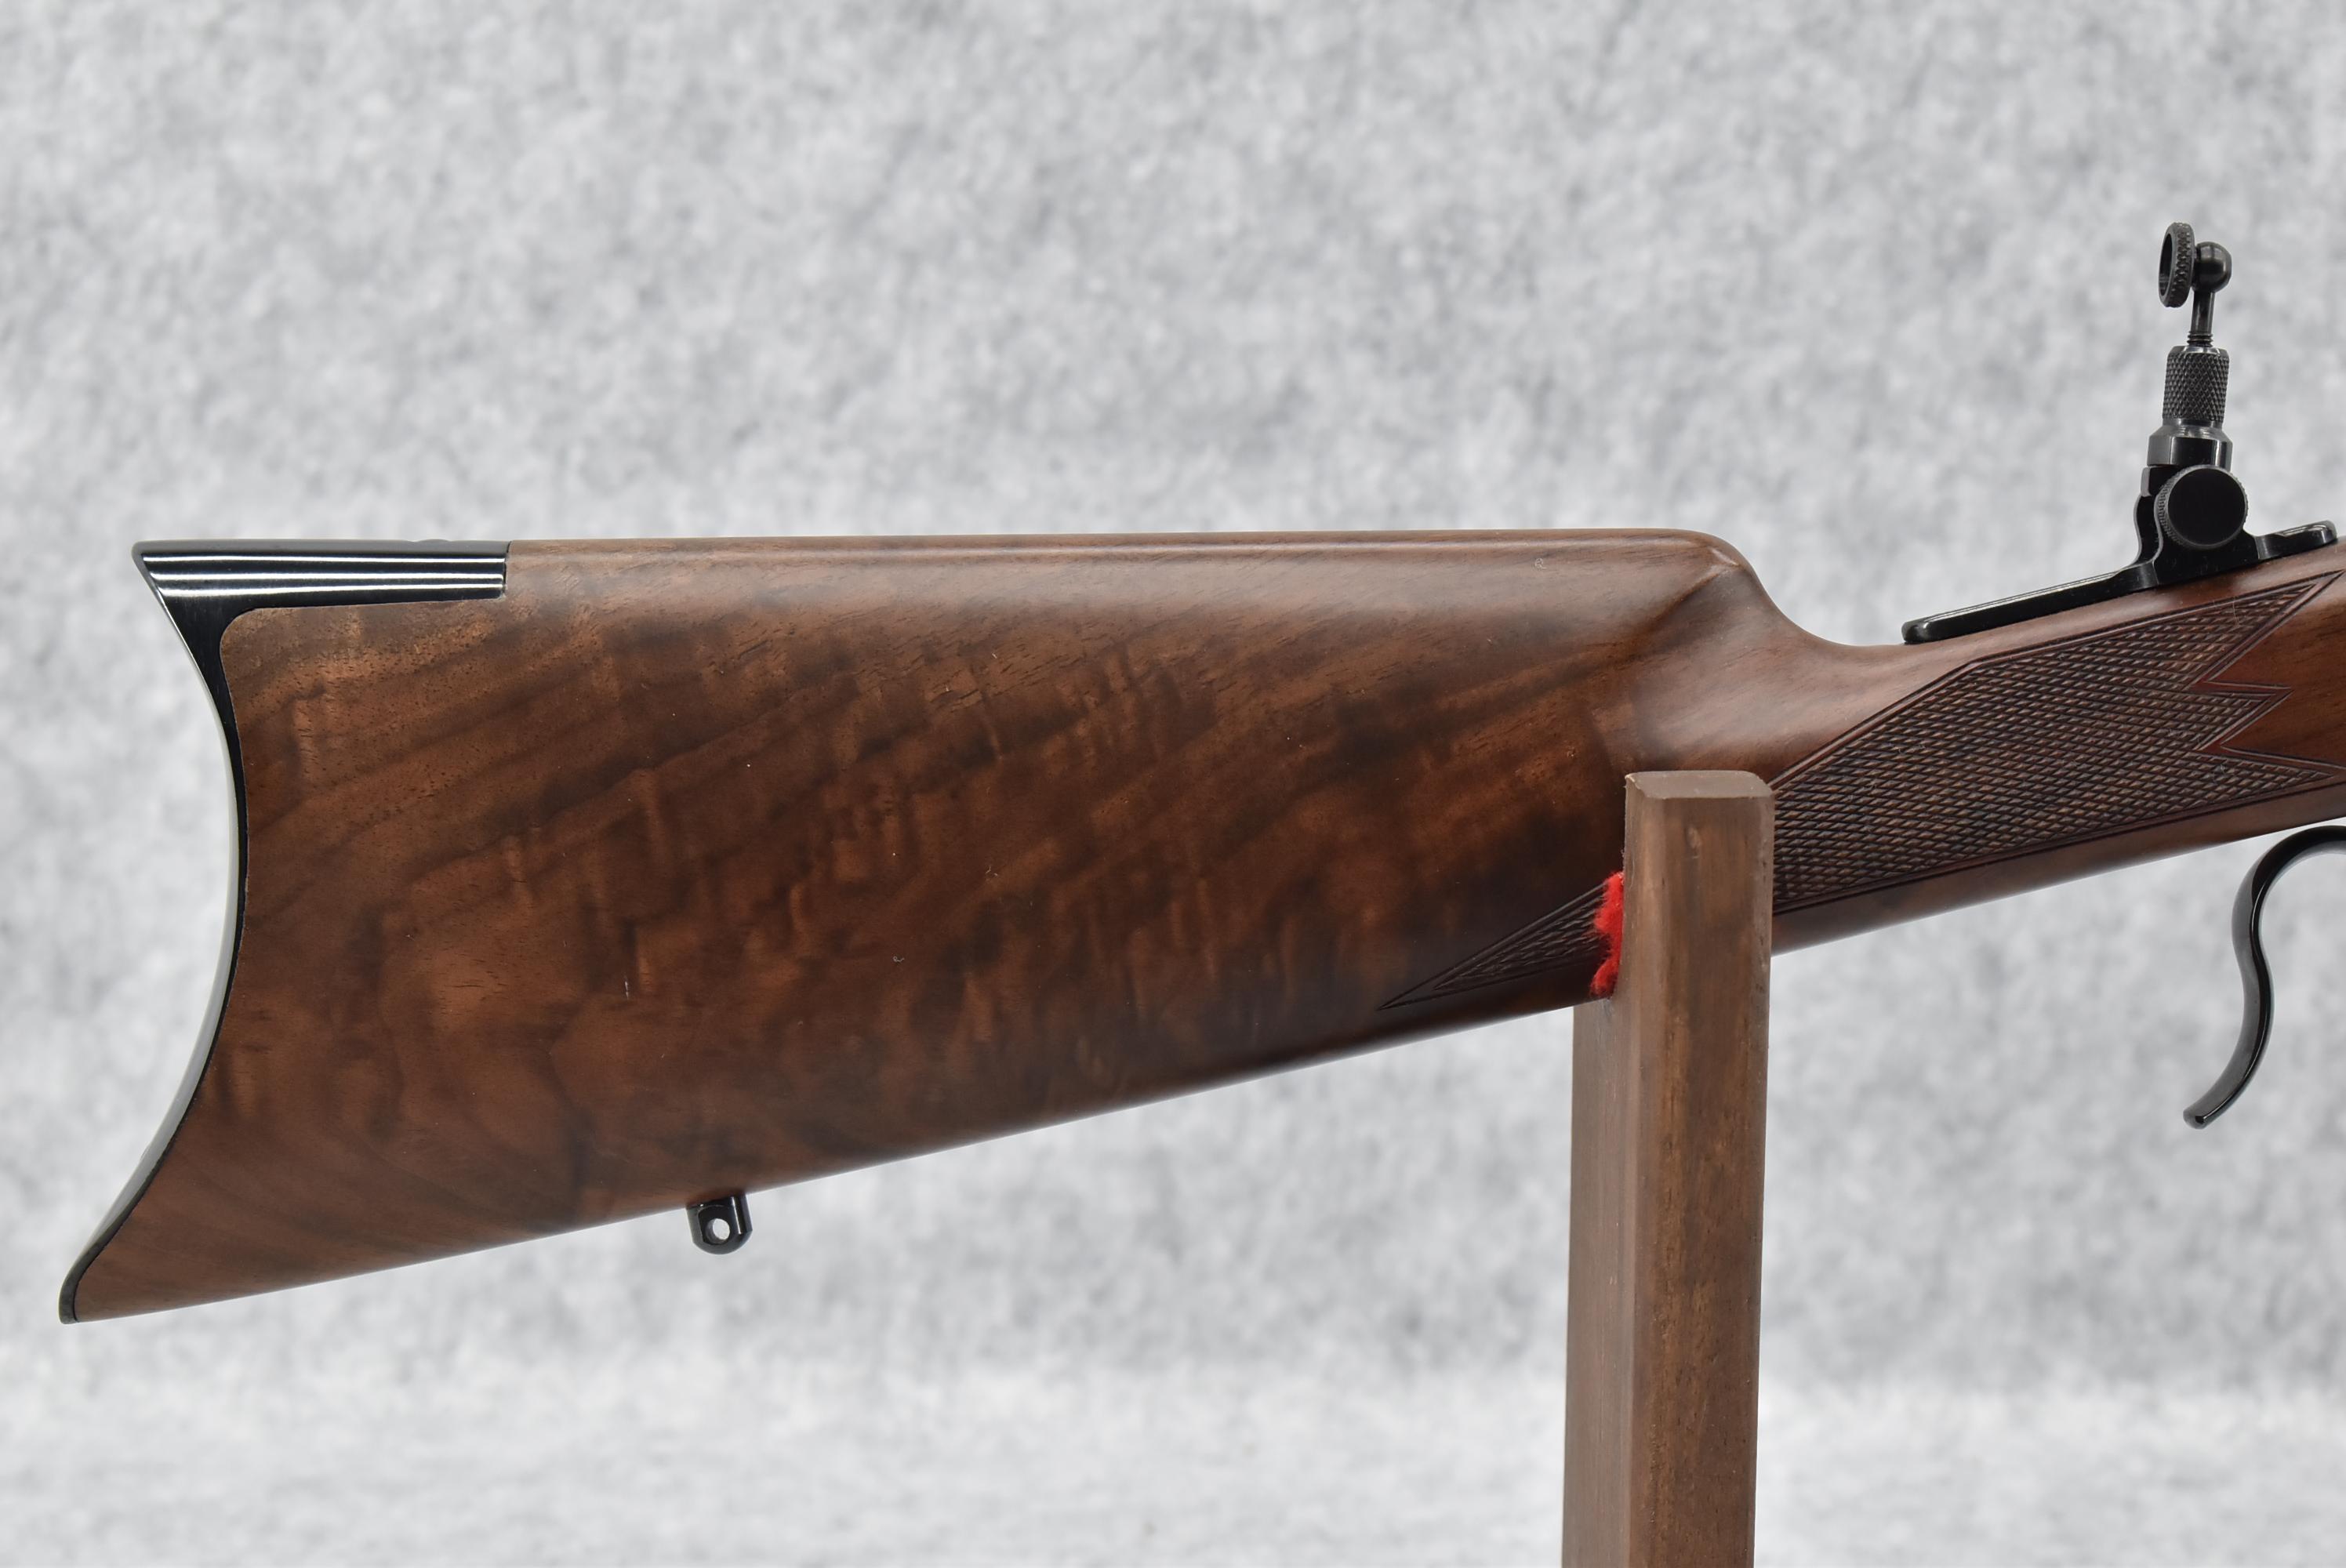 Browning – Mod. 1885 Highwall (Japan) – 30-30 Win. Cal. Single Shot Rifle